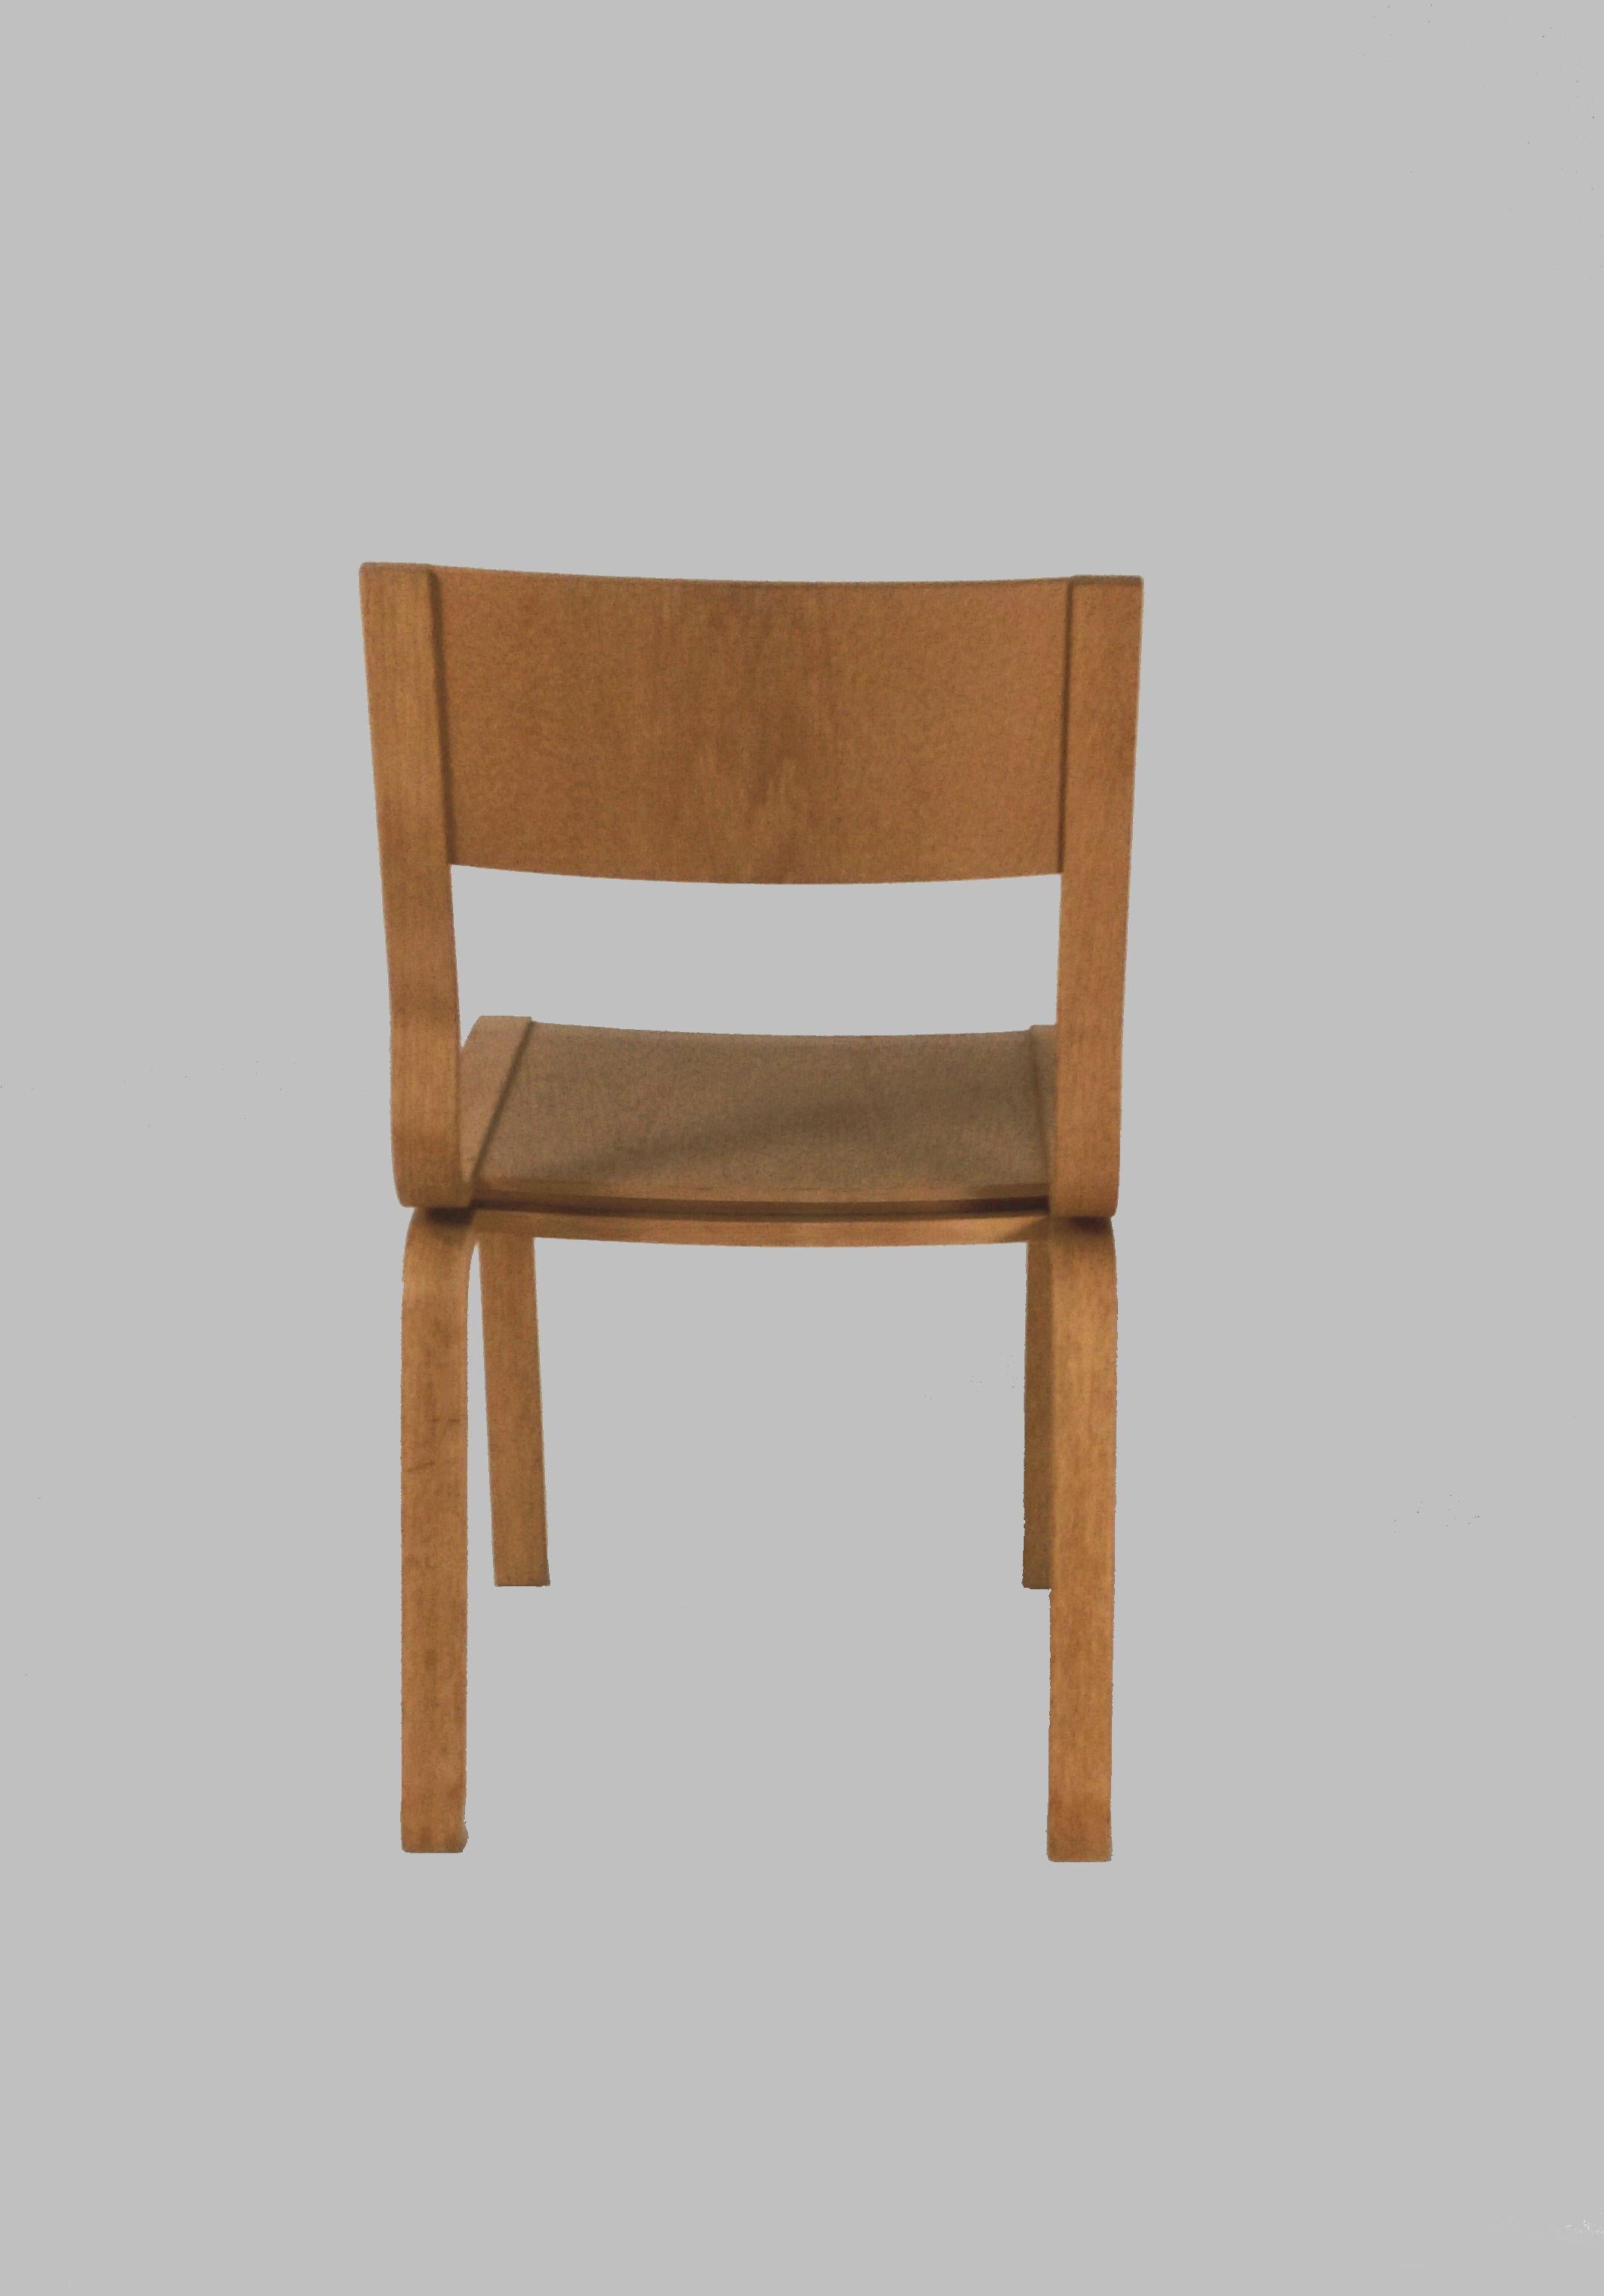 1965 Danish Arne Jacobsen Saint Catherines Desk and Chair in Oak by Fritz Hansen For Sale 6